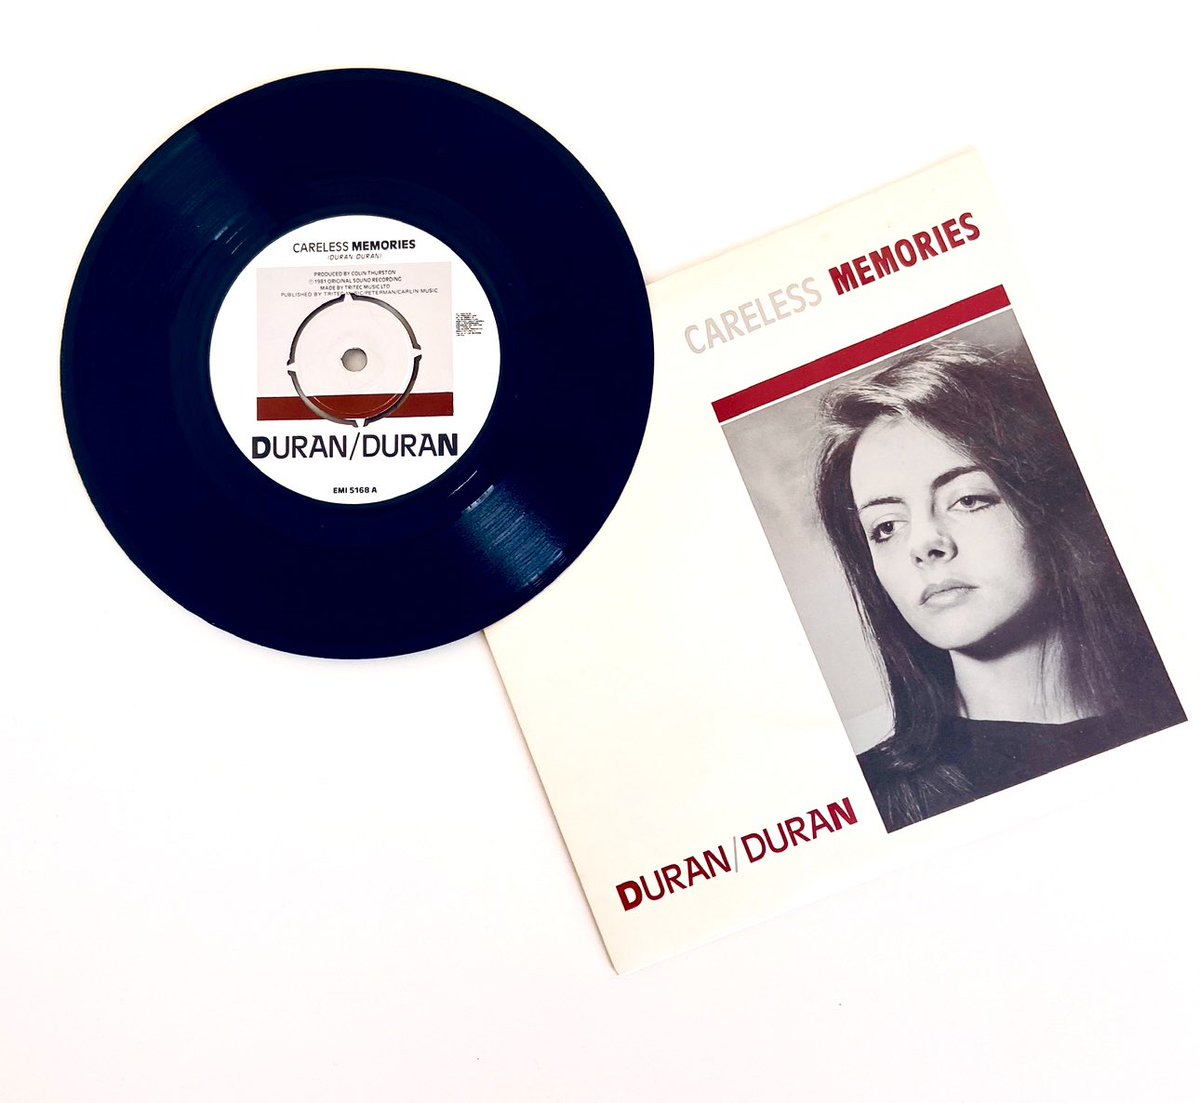 Brilliant song, I bought this copy when it was released 

20 April 1981

Duran Duran
Careless Memories

@duranduran #duranduran #music #80smusic #recordcollector #vinylsingle #vinylcommunity #vinylrecords #OnThisDay